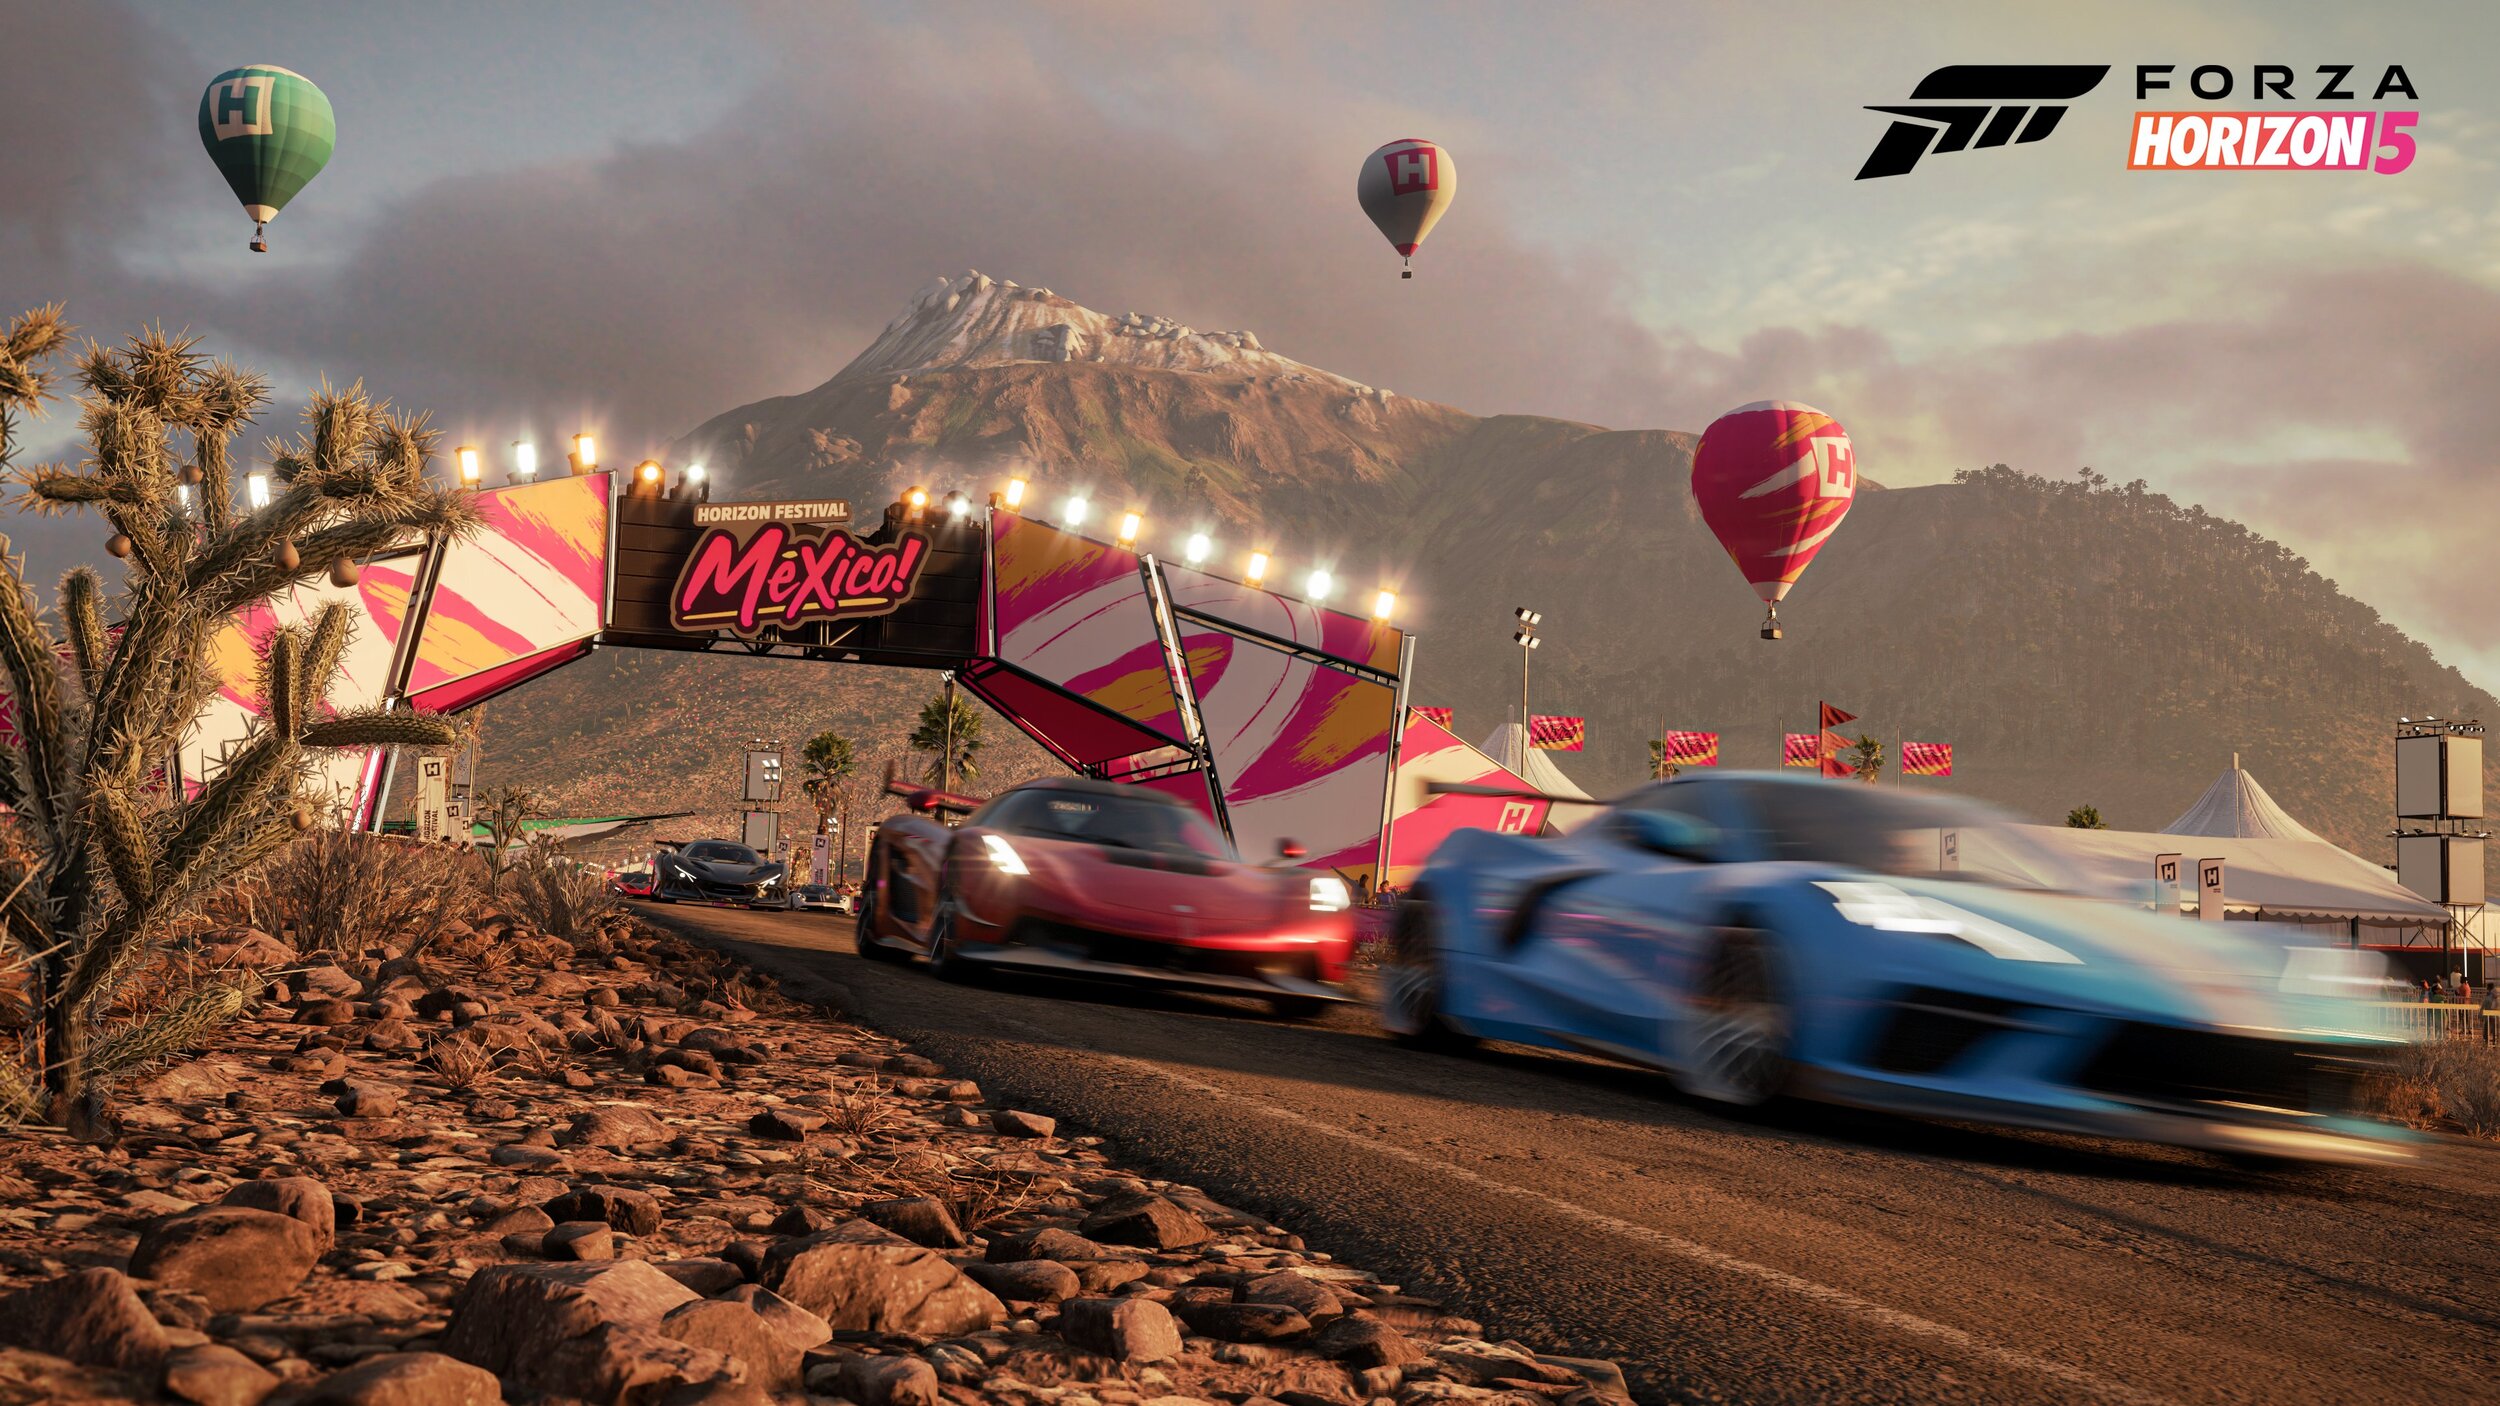 Forza Horizon 5 Drastically Improves Engine Sounds & Adds Upgradable Car Audio